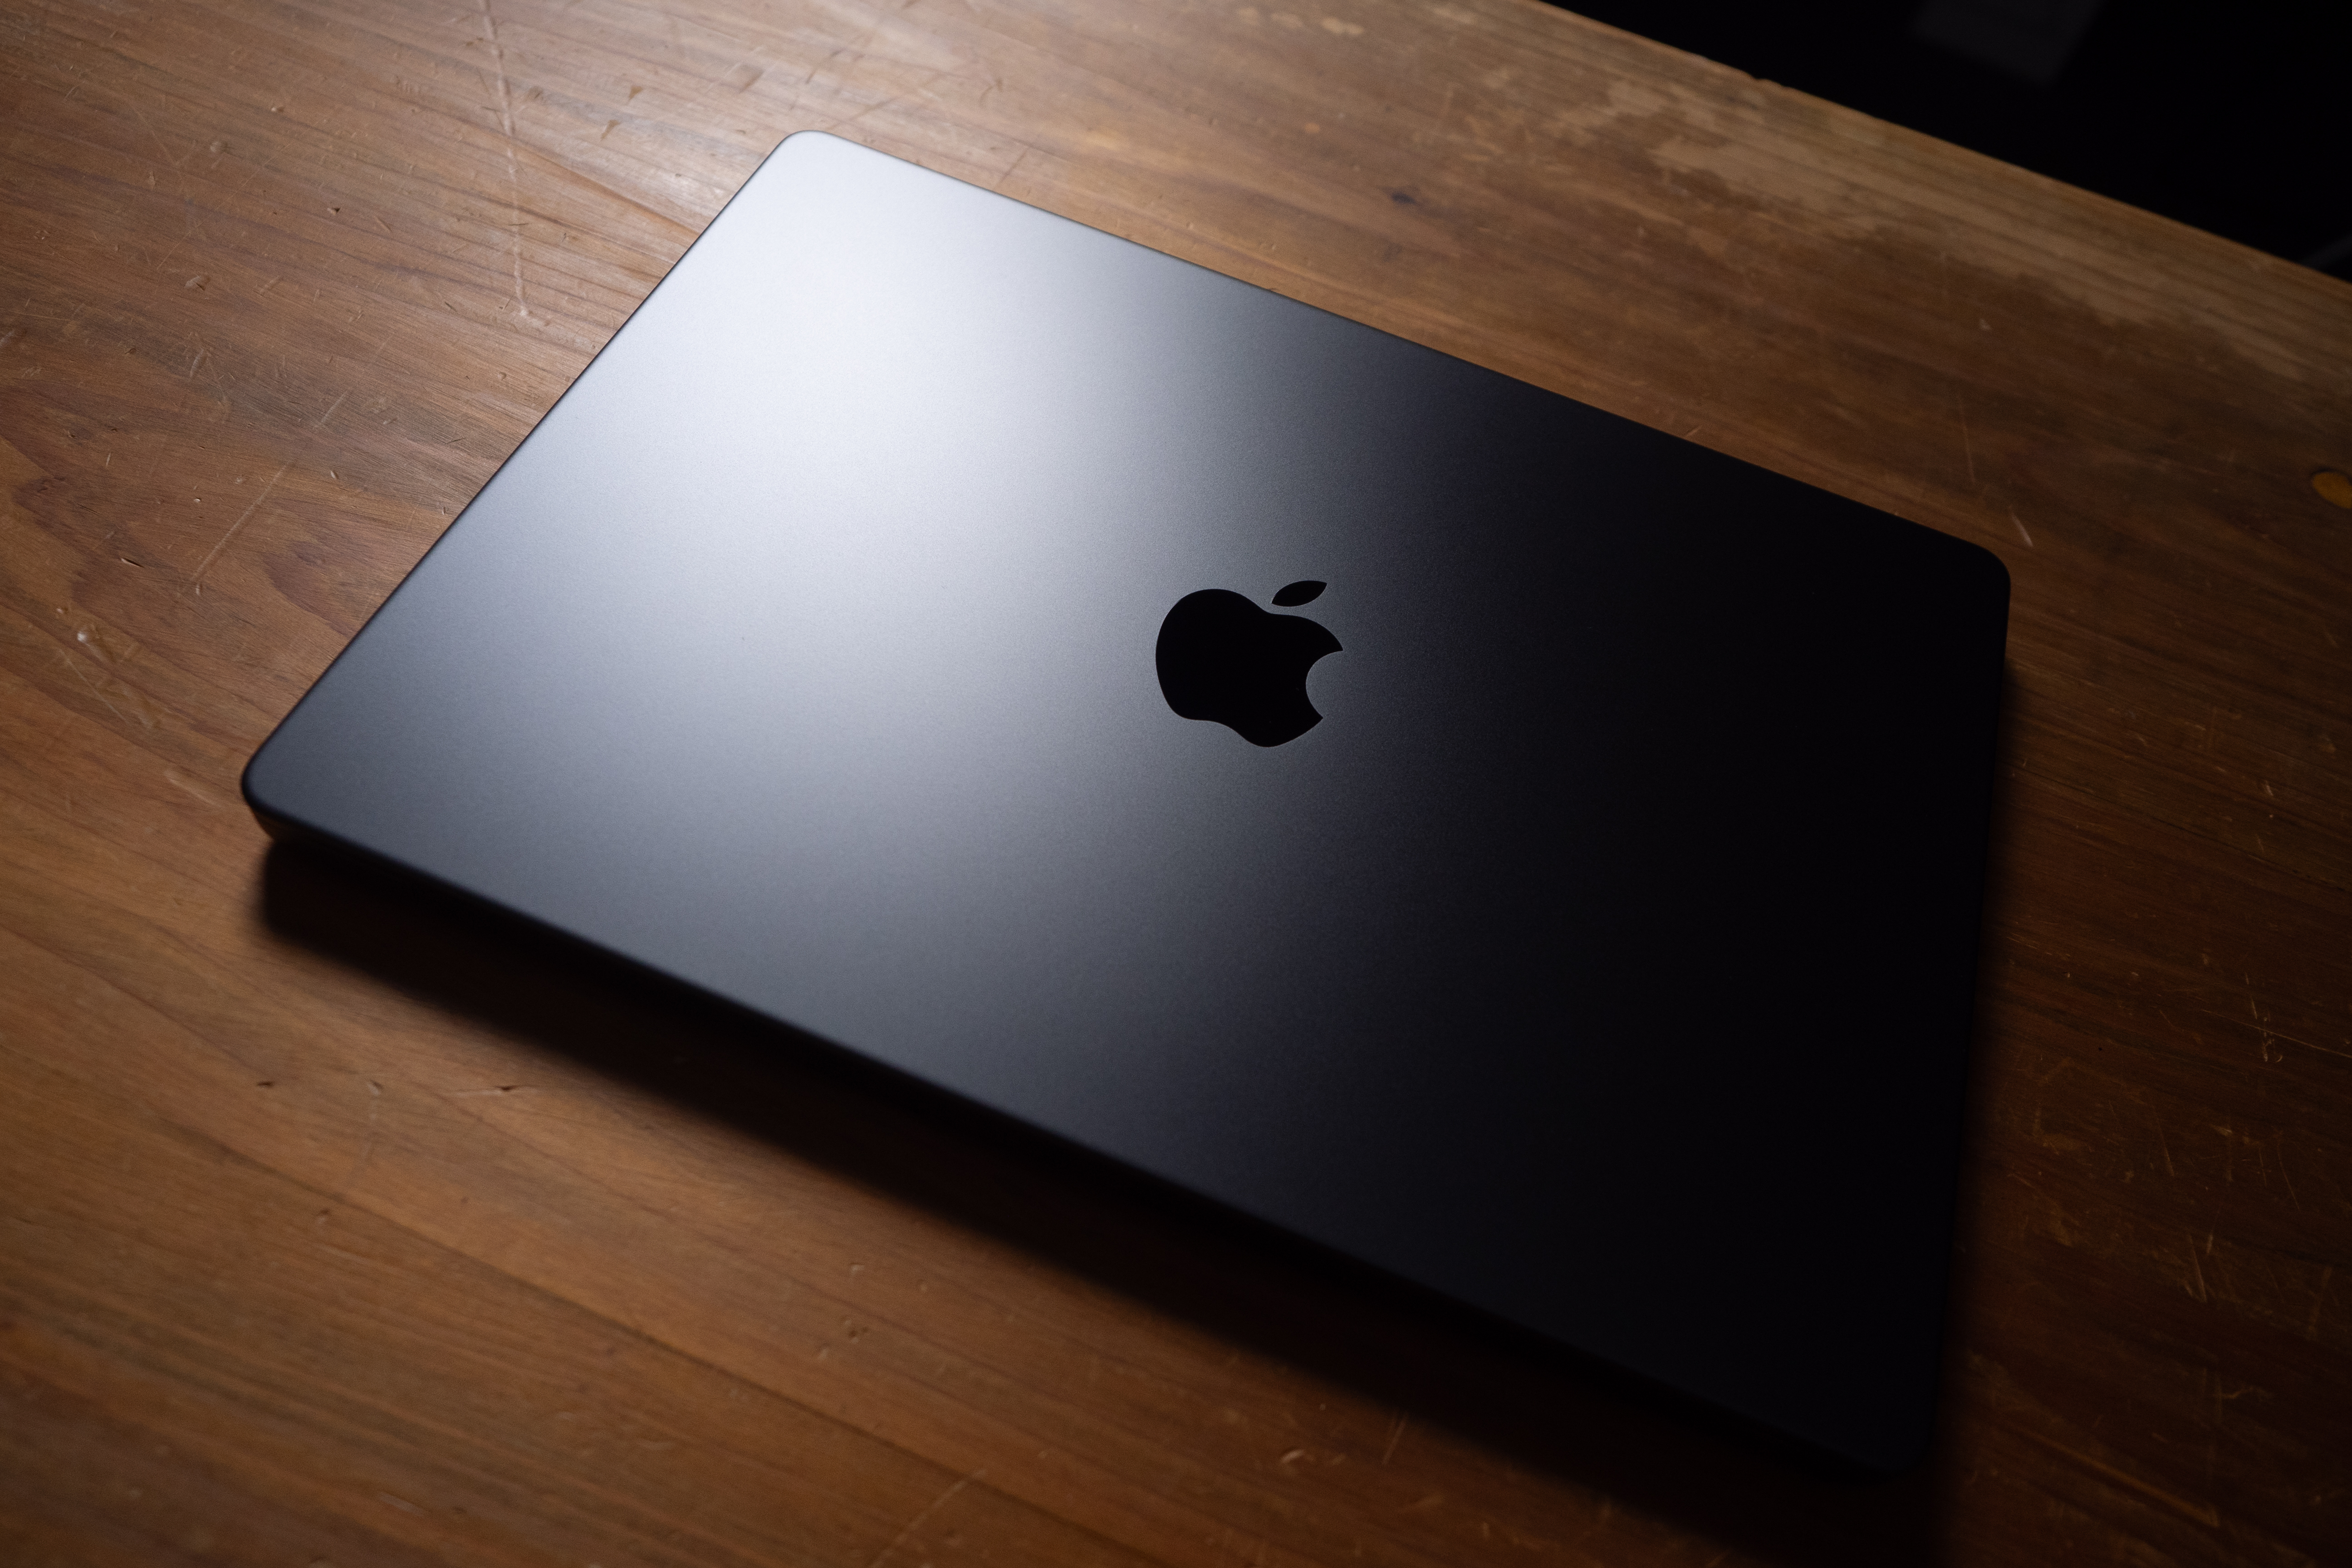 MacBook Pro (Retina,15-inch, Early 2013)